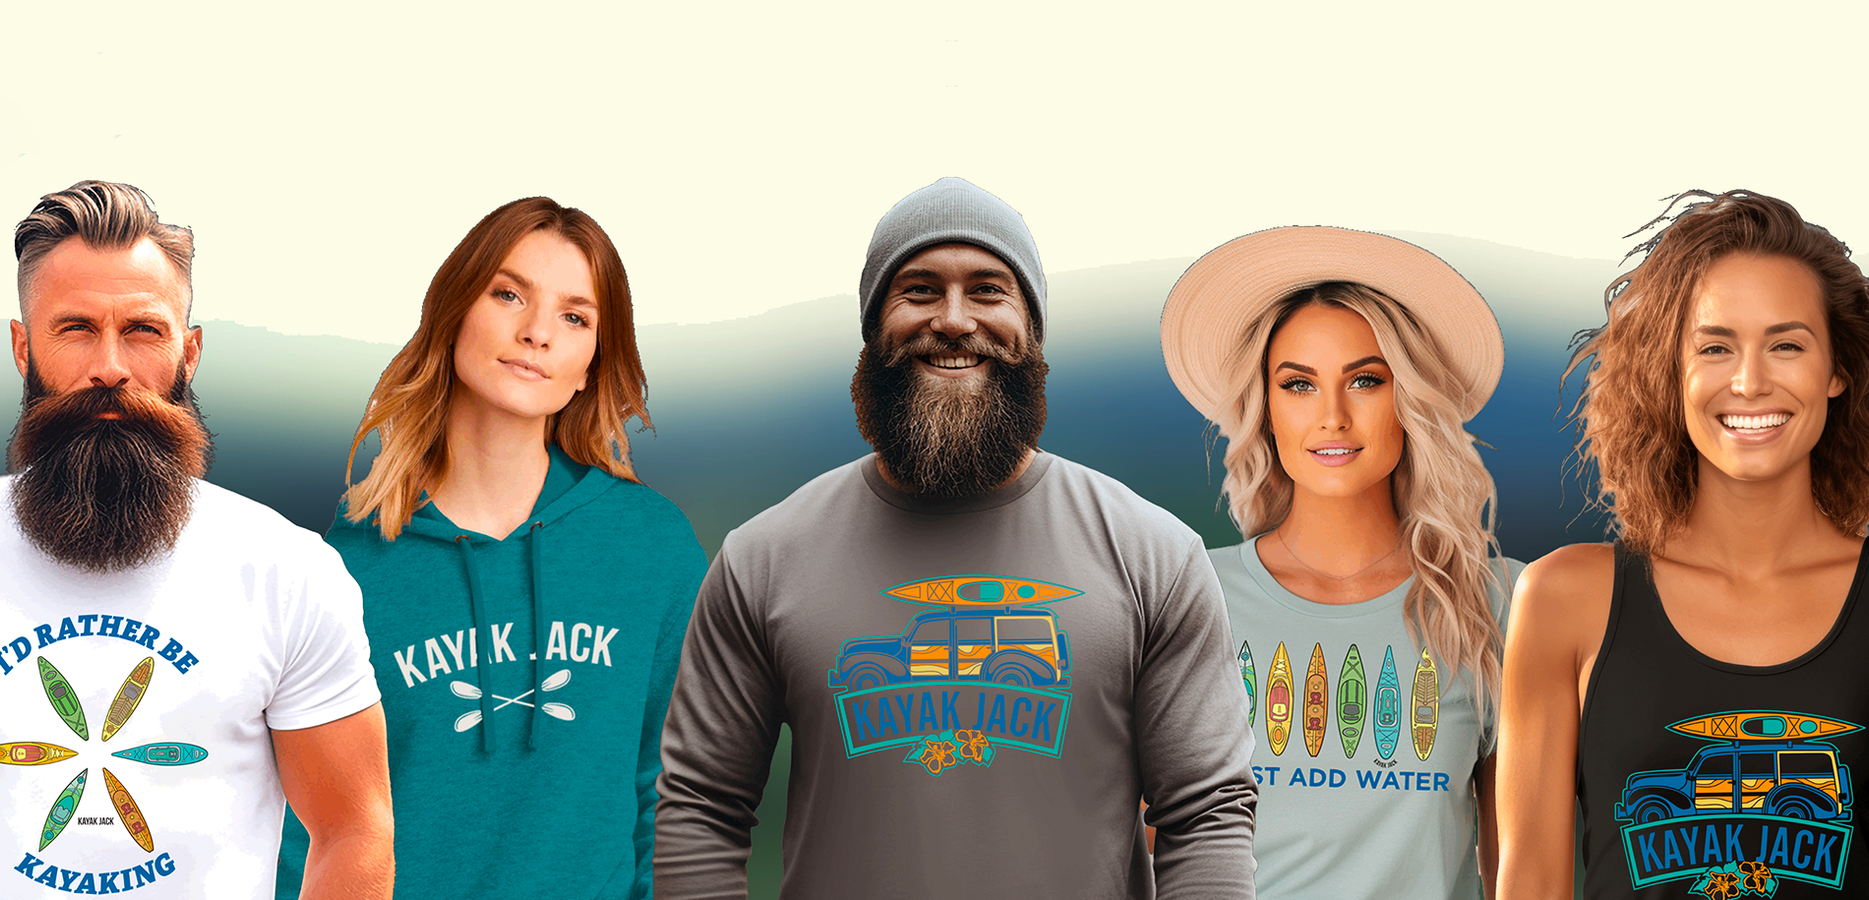 Kayak Jack, UPF Shirts Hats Kayaker Gifts